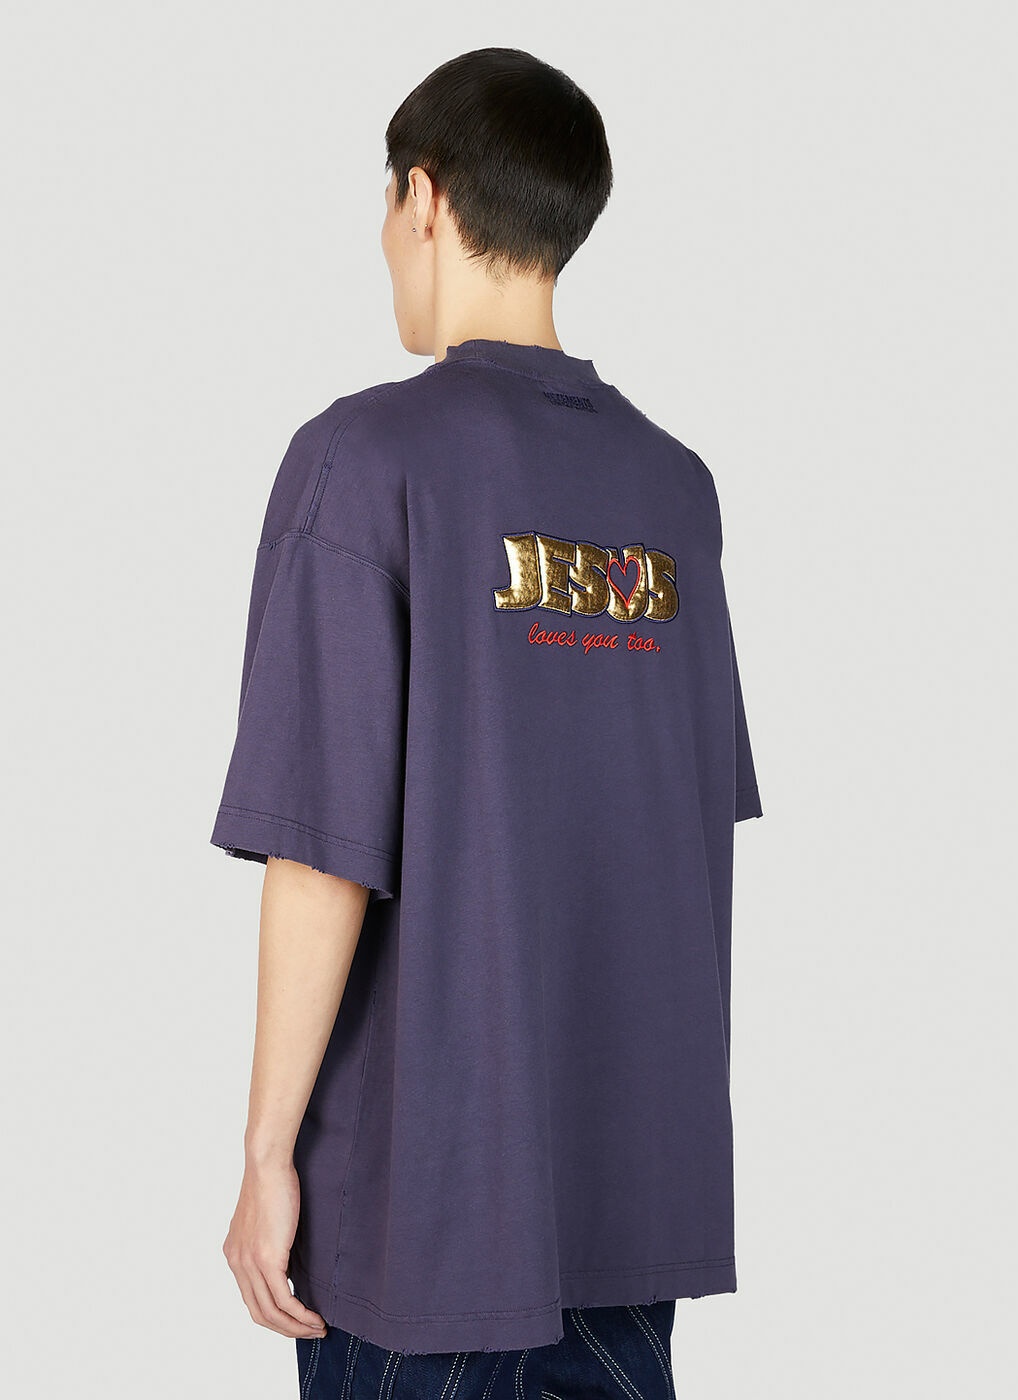 VETEMENTS - Jesus Loves Me T-Shirt in Navy Vetements